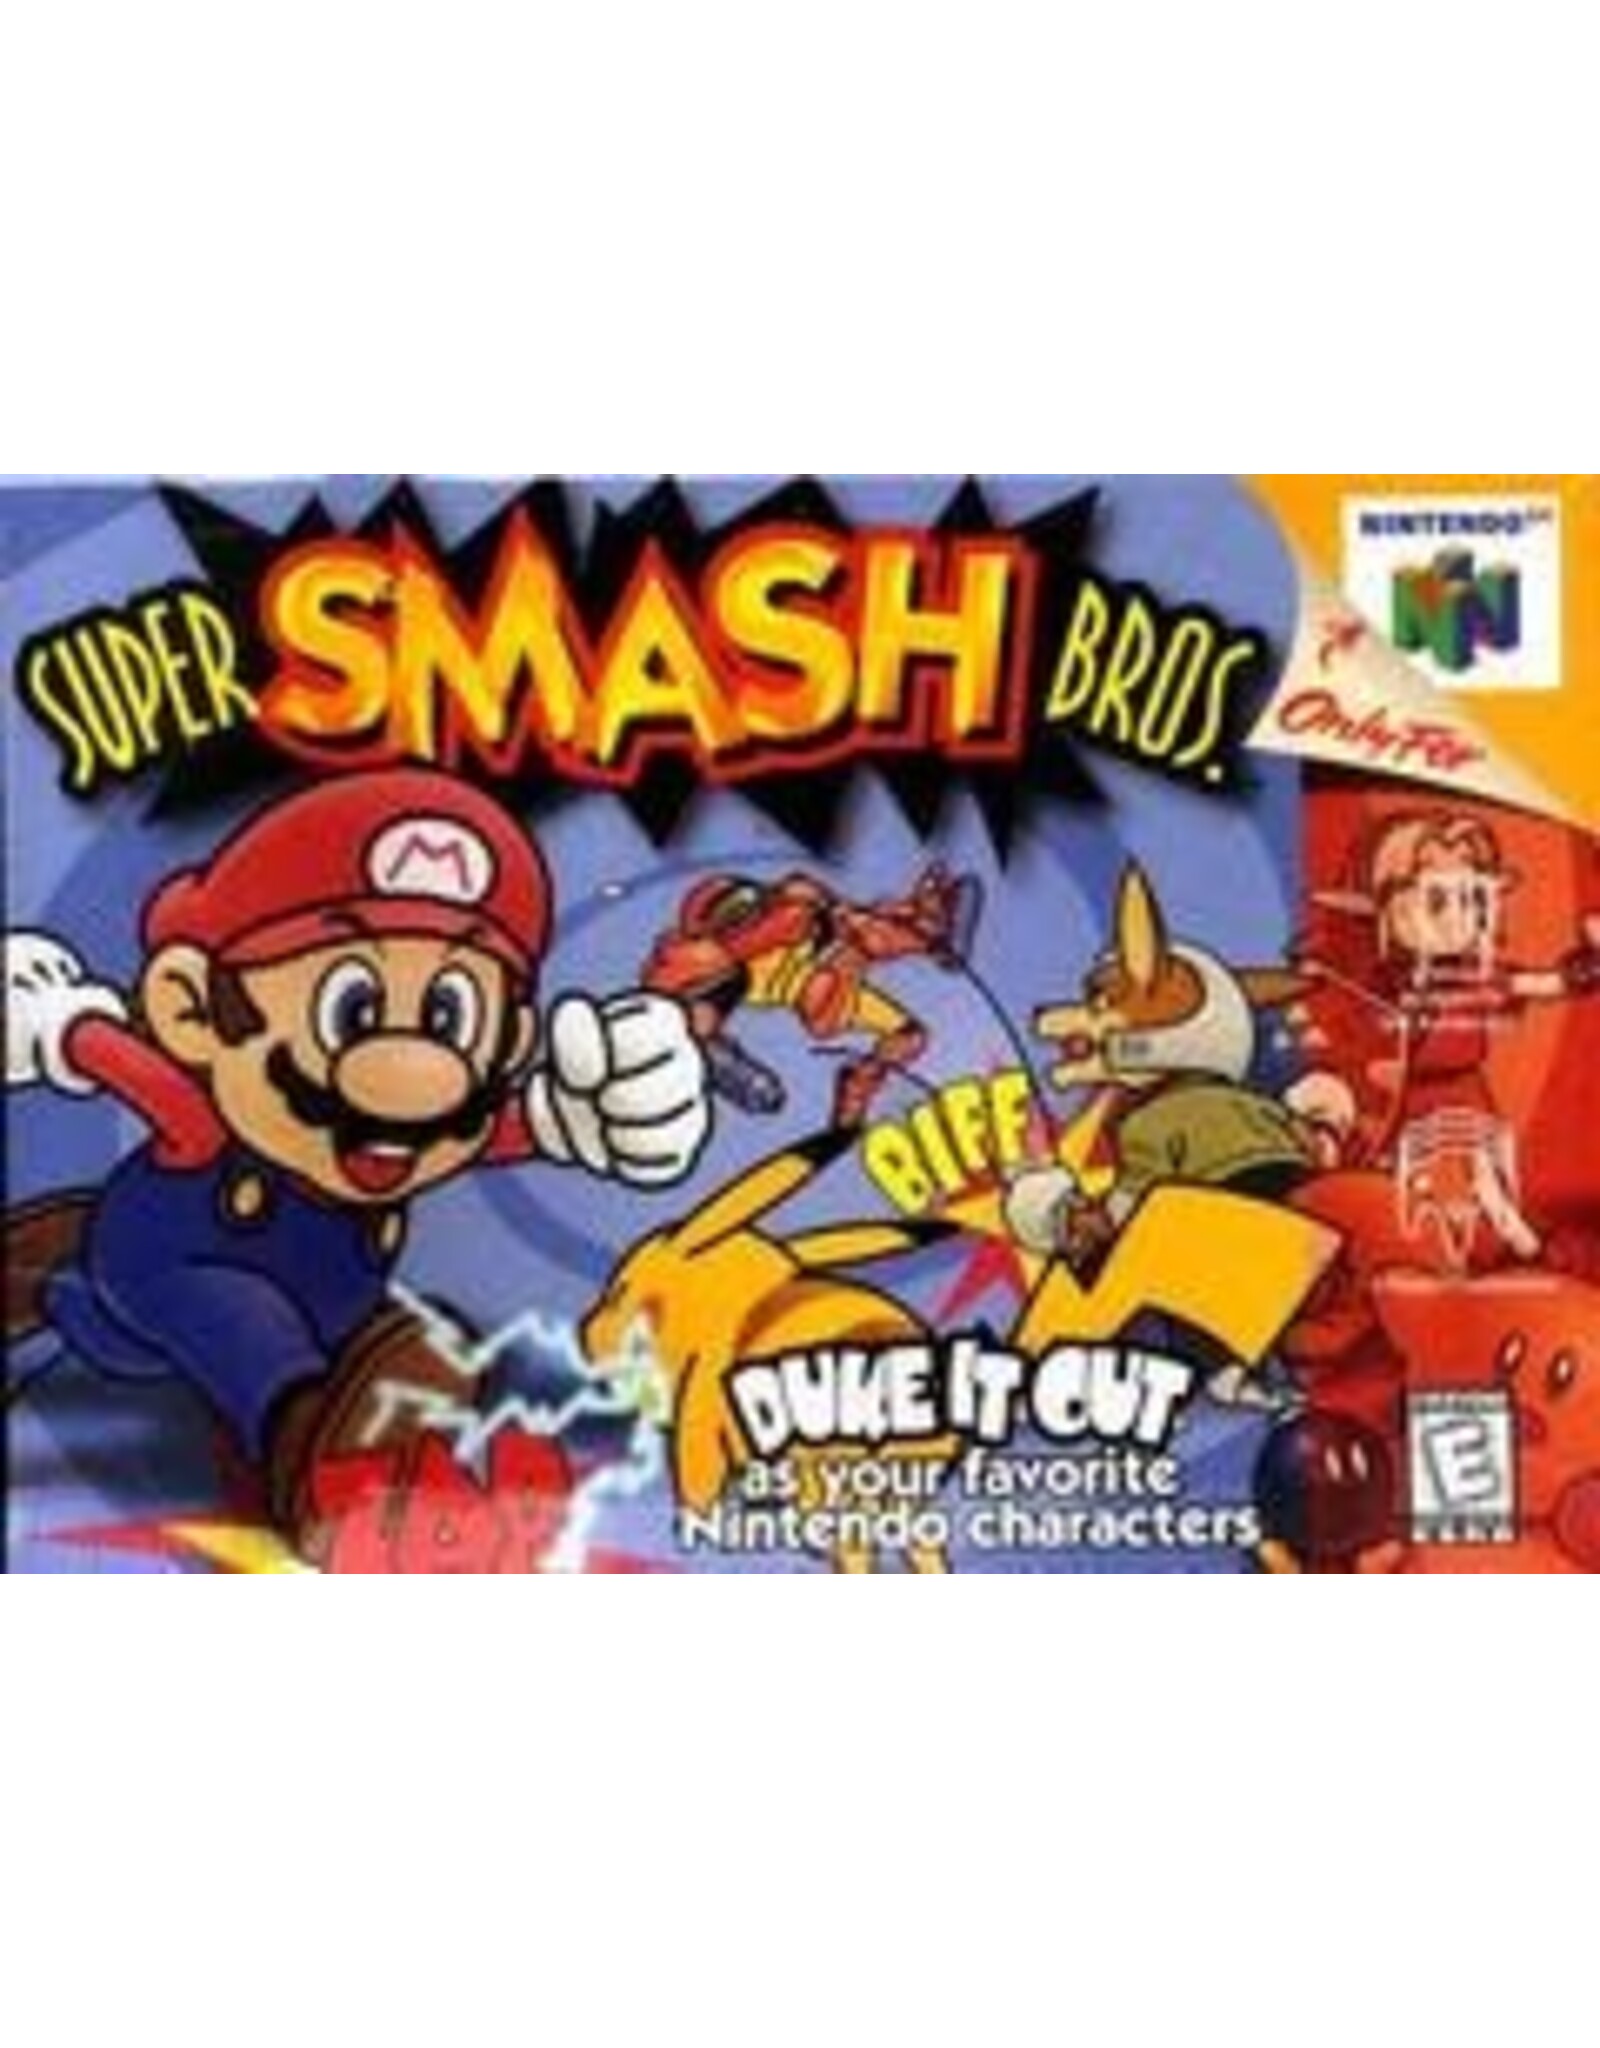 Nintendo 64 Super Smash Bros. (Used)